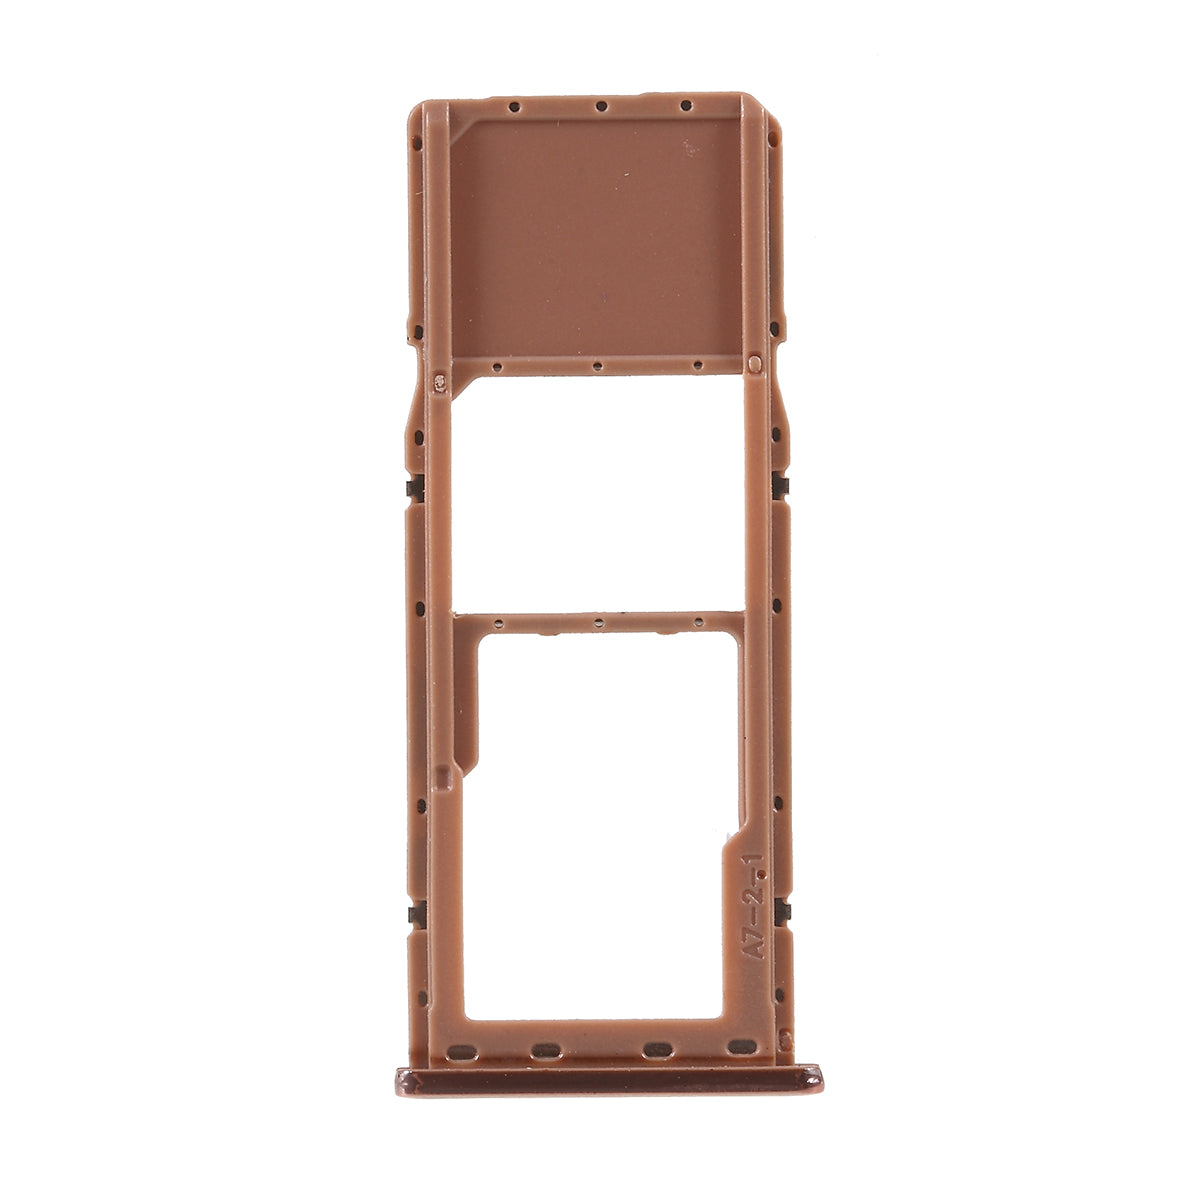 OEM Single SIM Card Tray Holder Slot for Samsung Galaxy A7 (2018) A750 - Rose Gold